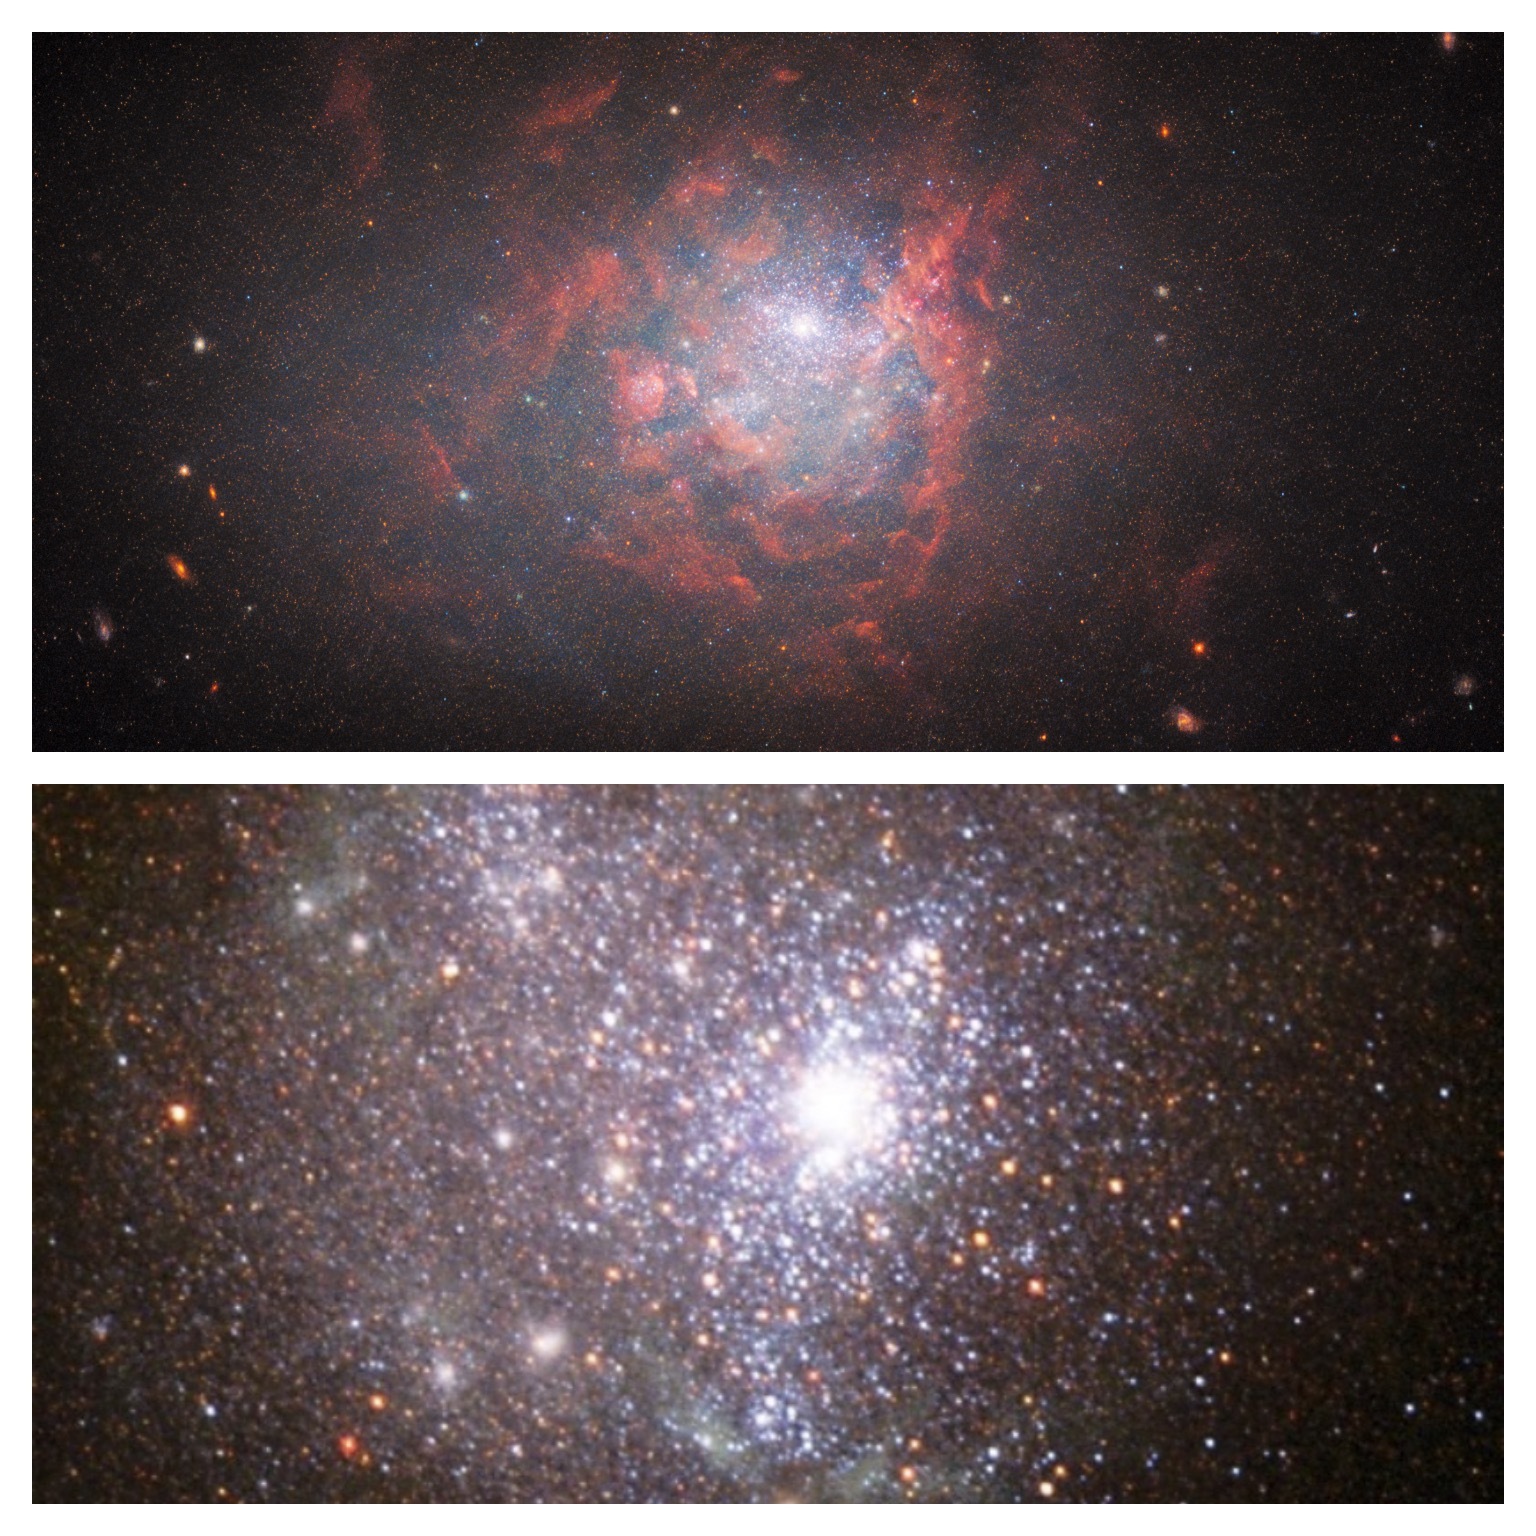 A comparison of dwarf galaxy images